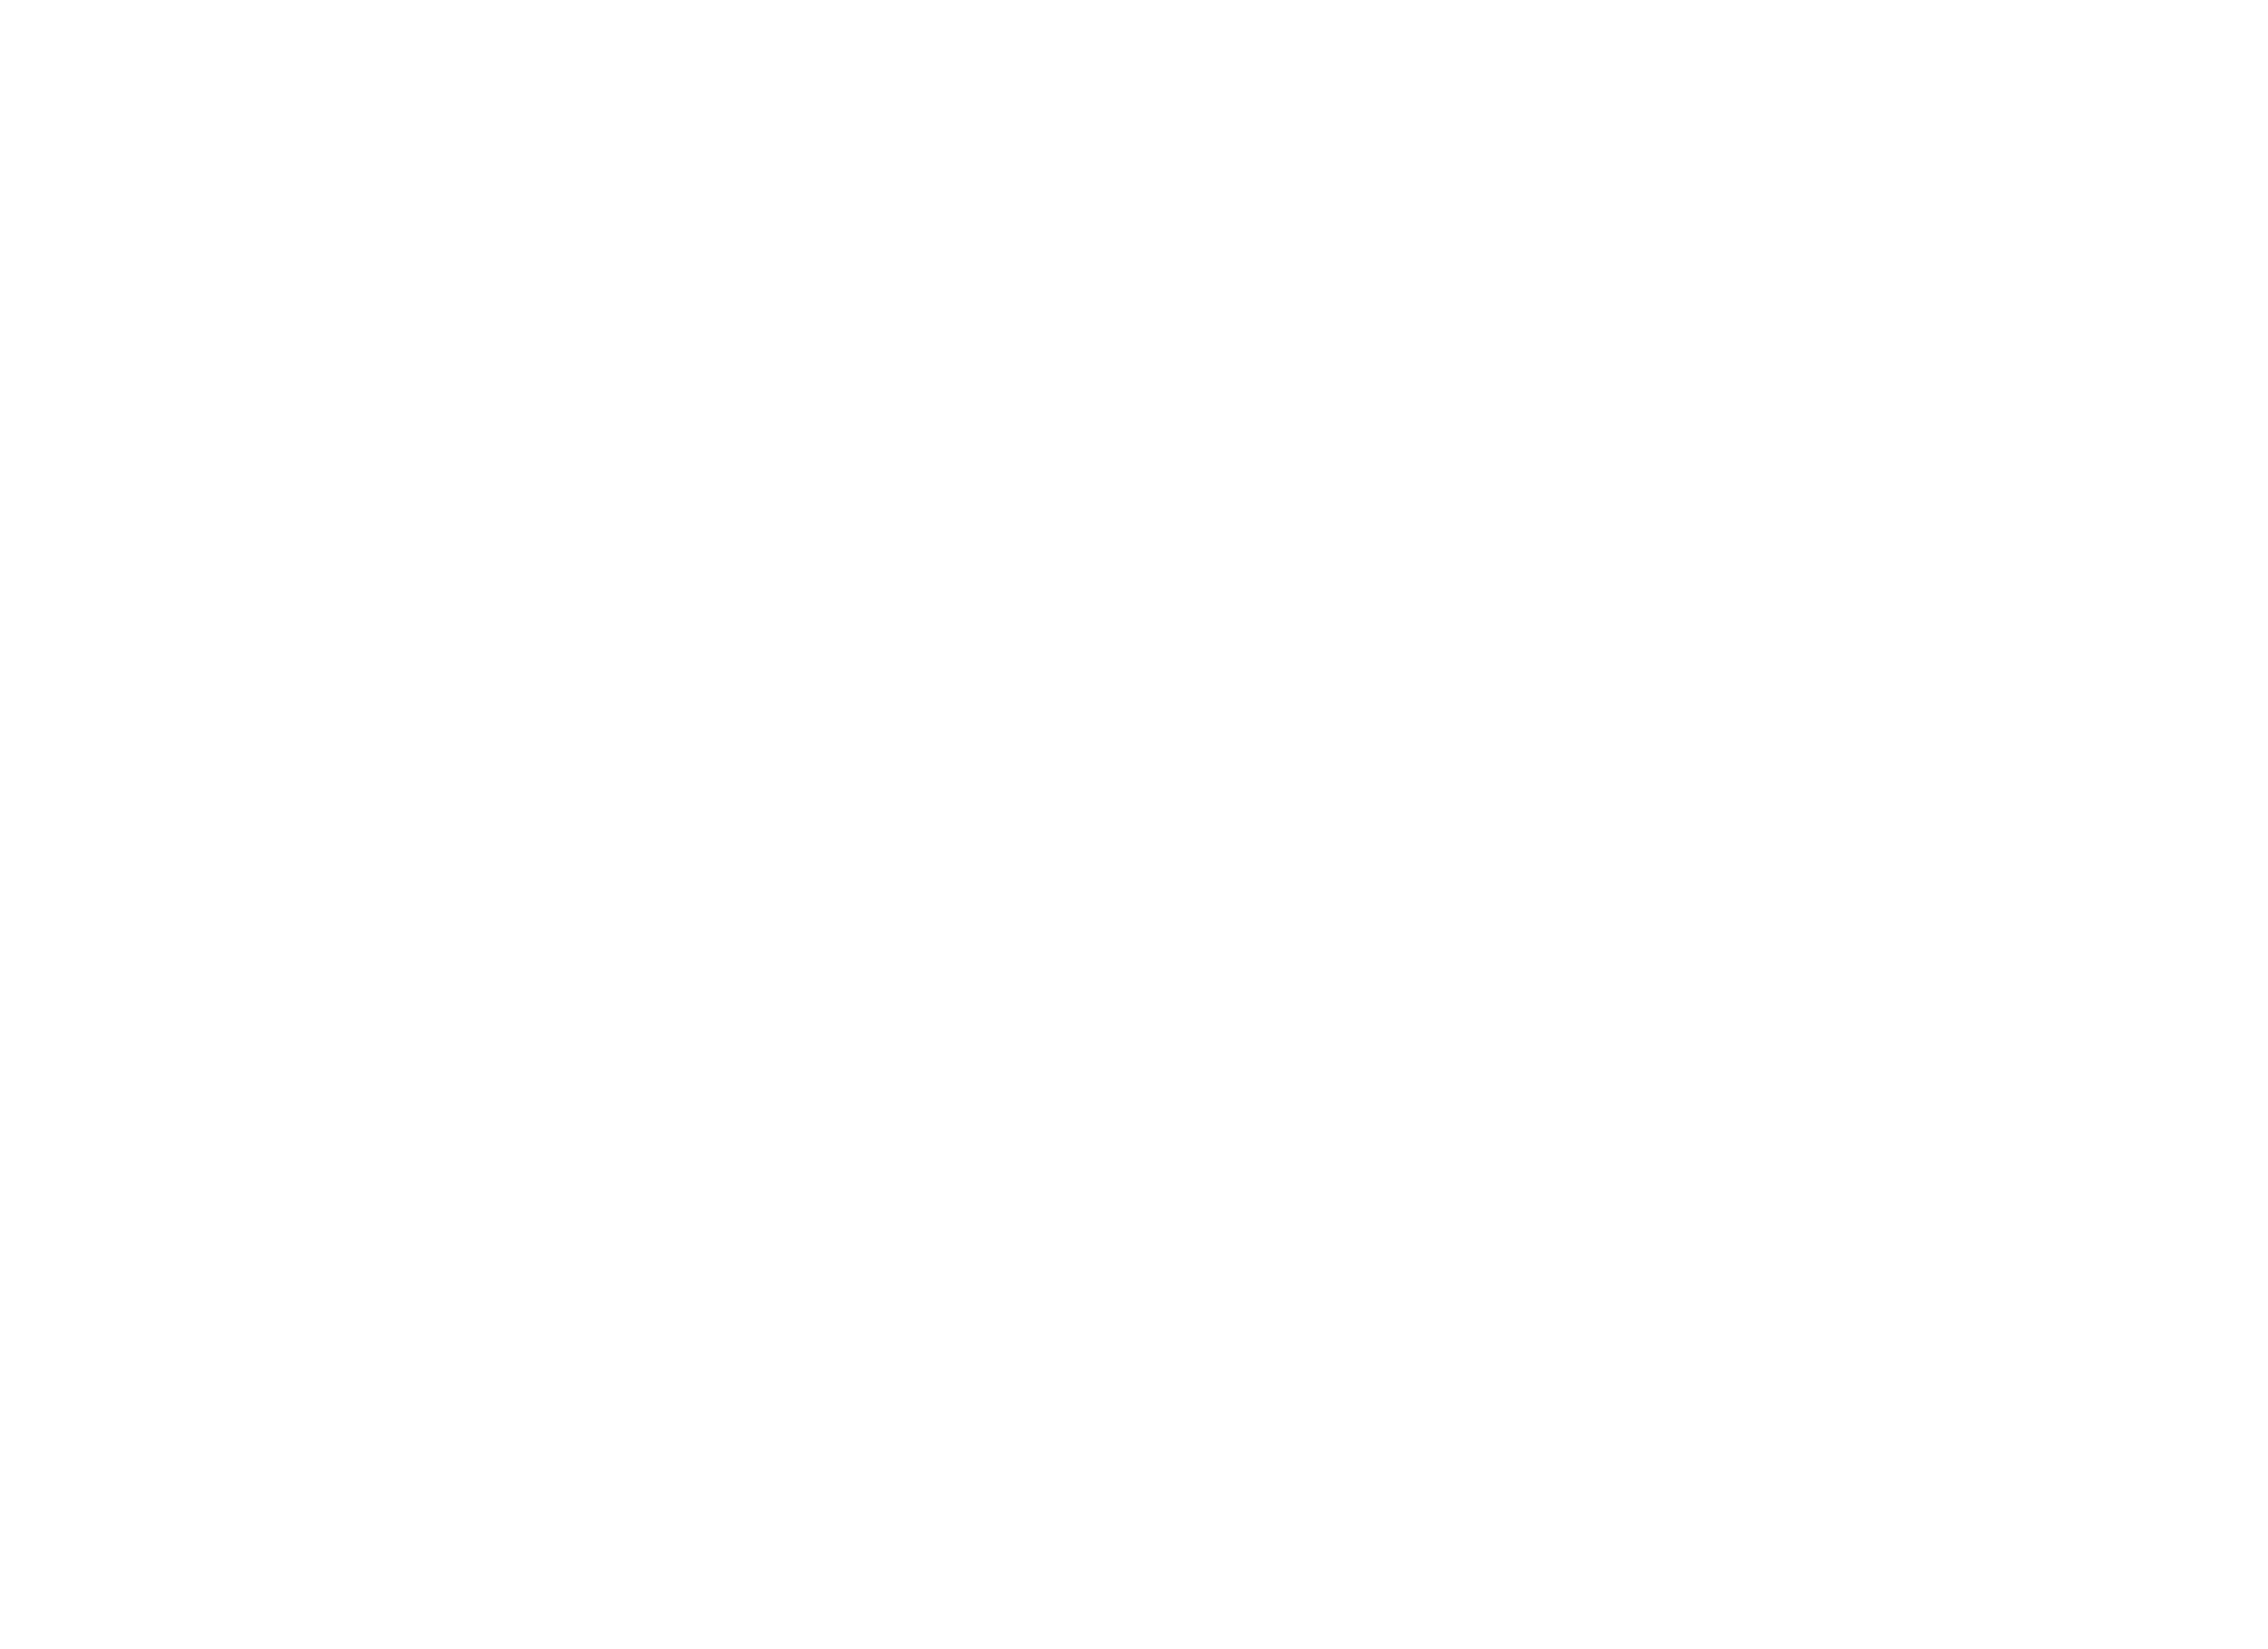 lyft-logo-black-and-white.png